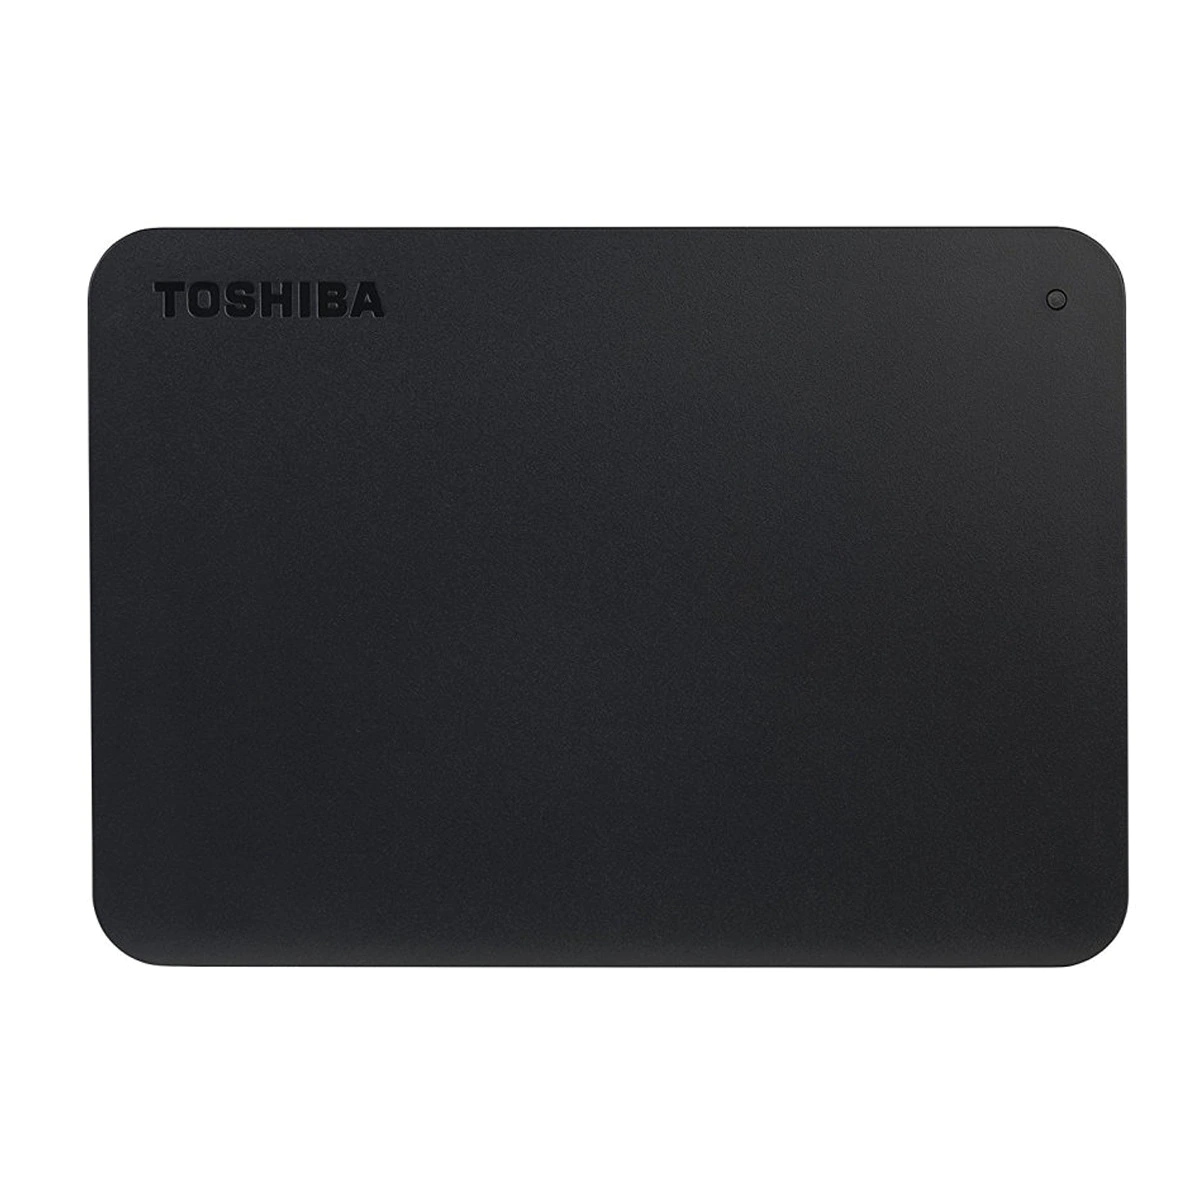 Disco duro externo Toshiba Canvio Basics 2TB, USB 3.0